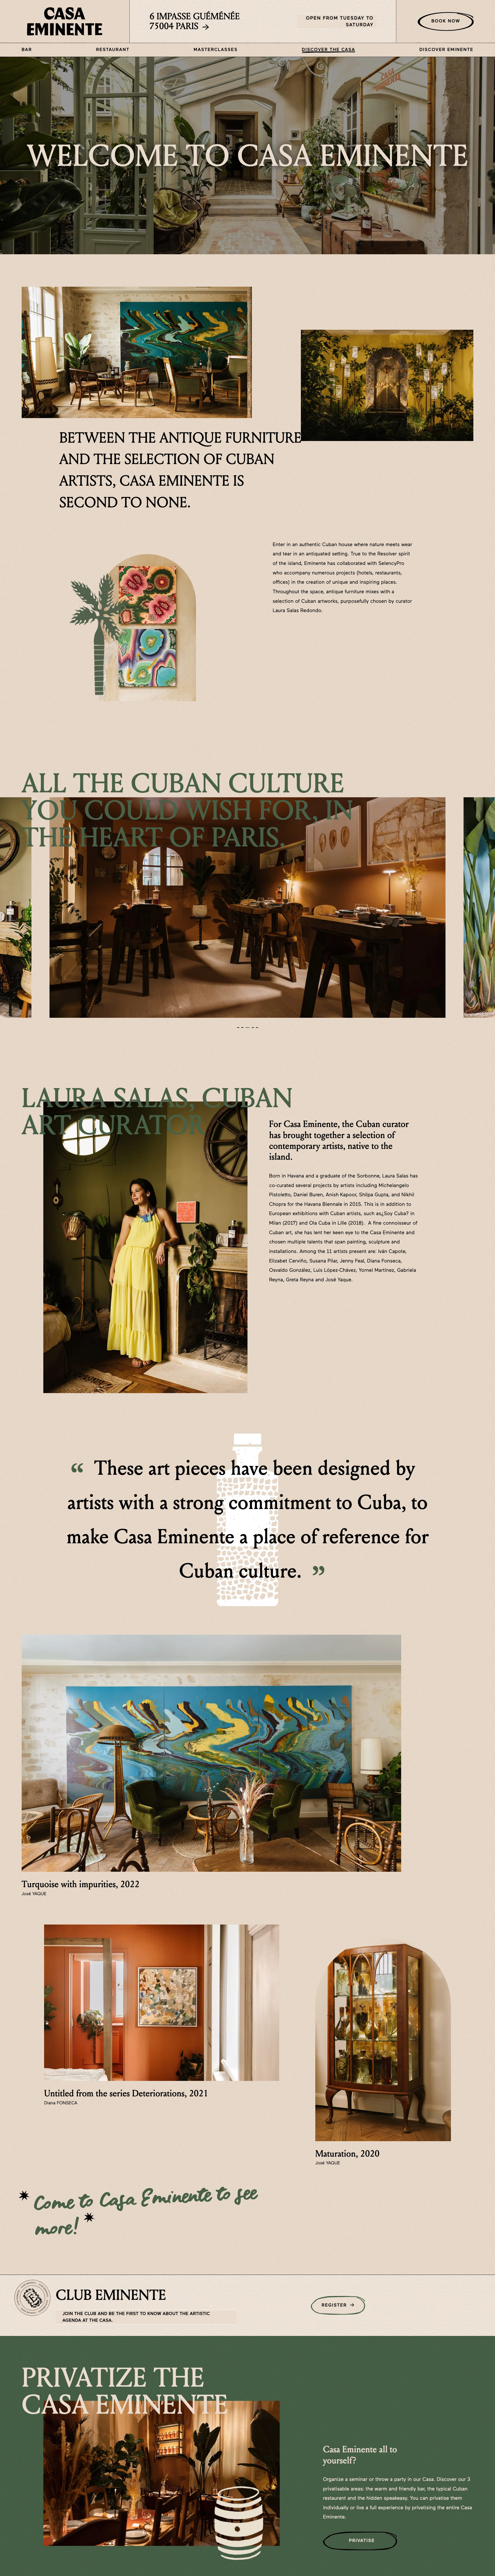 Casa Eminente Landing Page Example: Cuban culture awaits in a parisian impasse.